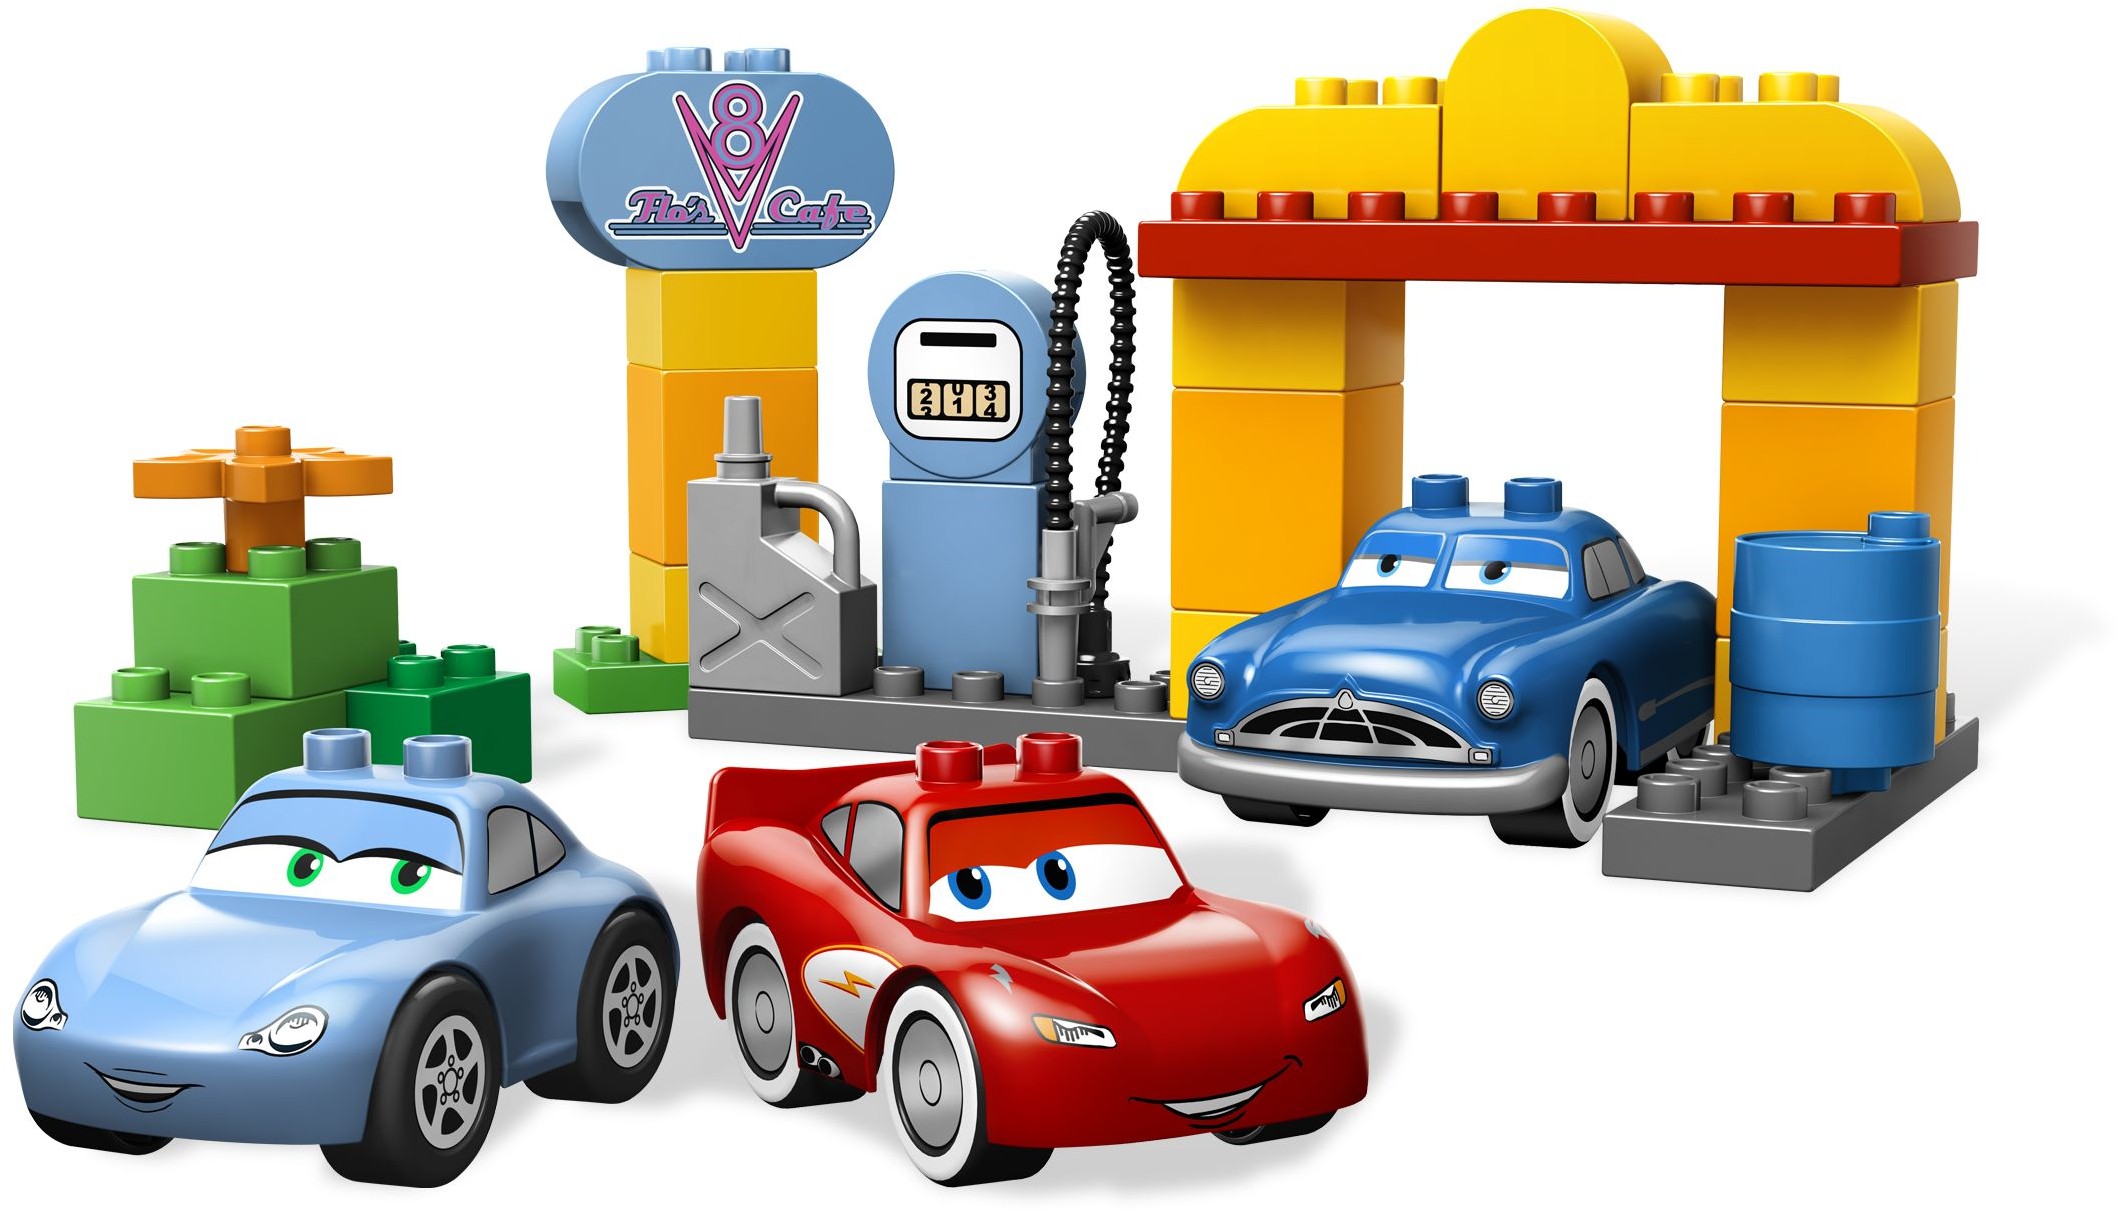 LEGO DUPLO Disney and Pixar's Cars Lightning McQueen & Mater's Car